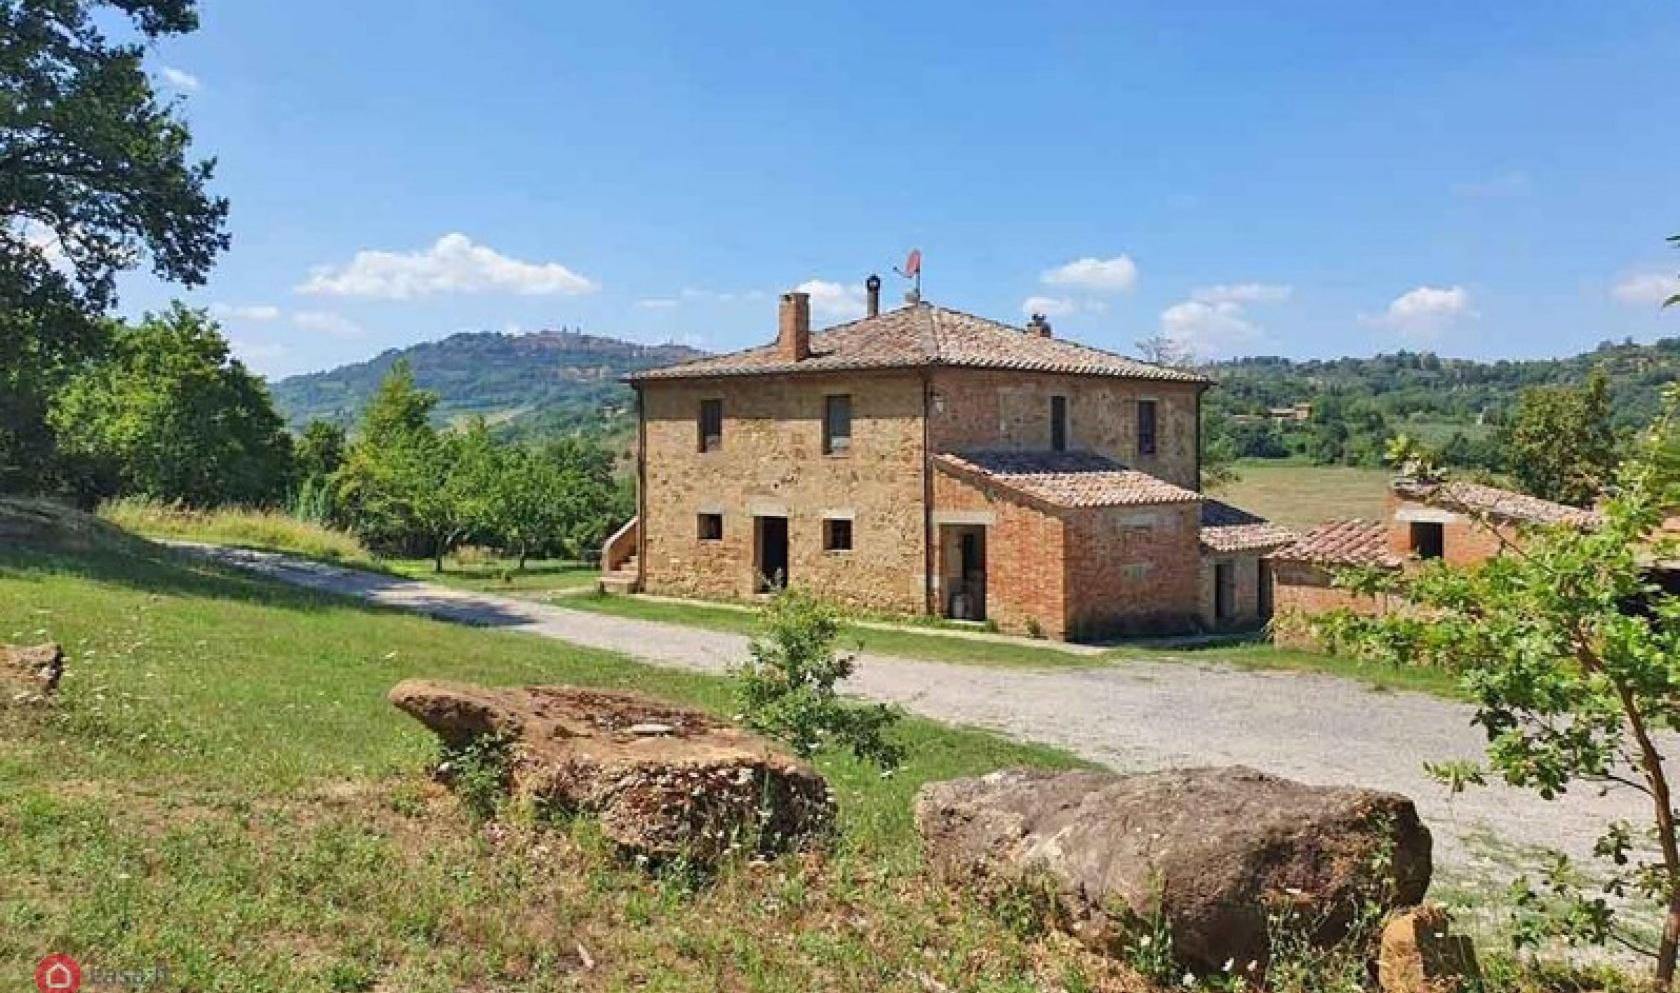 Toscana Immobiliare - Casali tipici toscani in vendita a Montepulciano, Siena